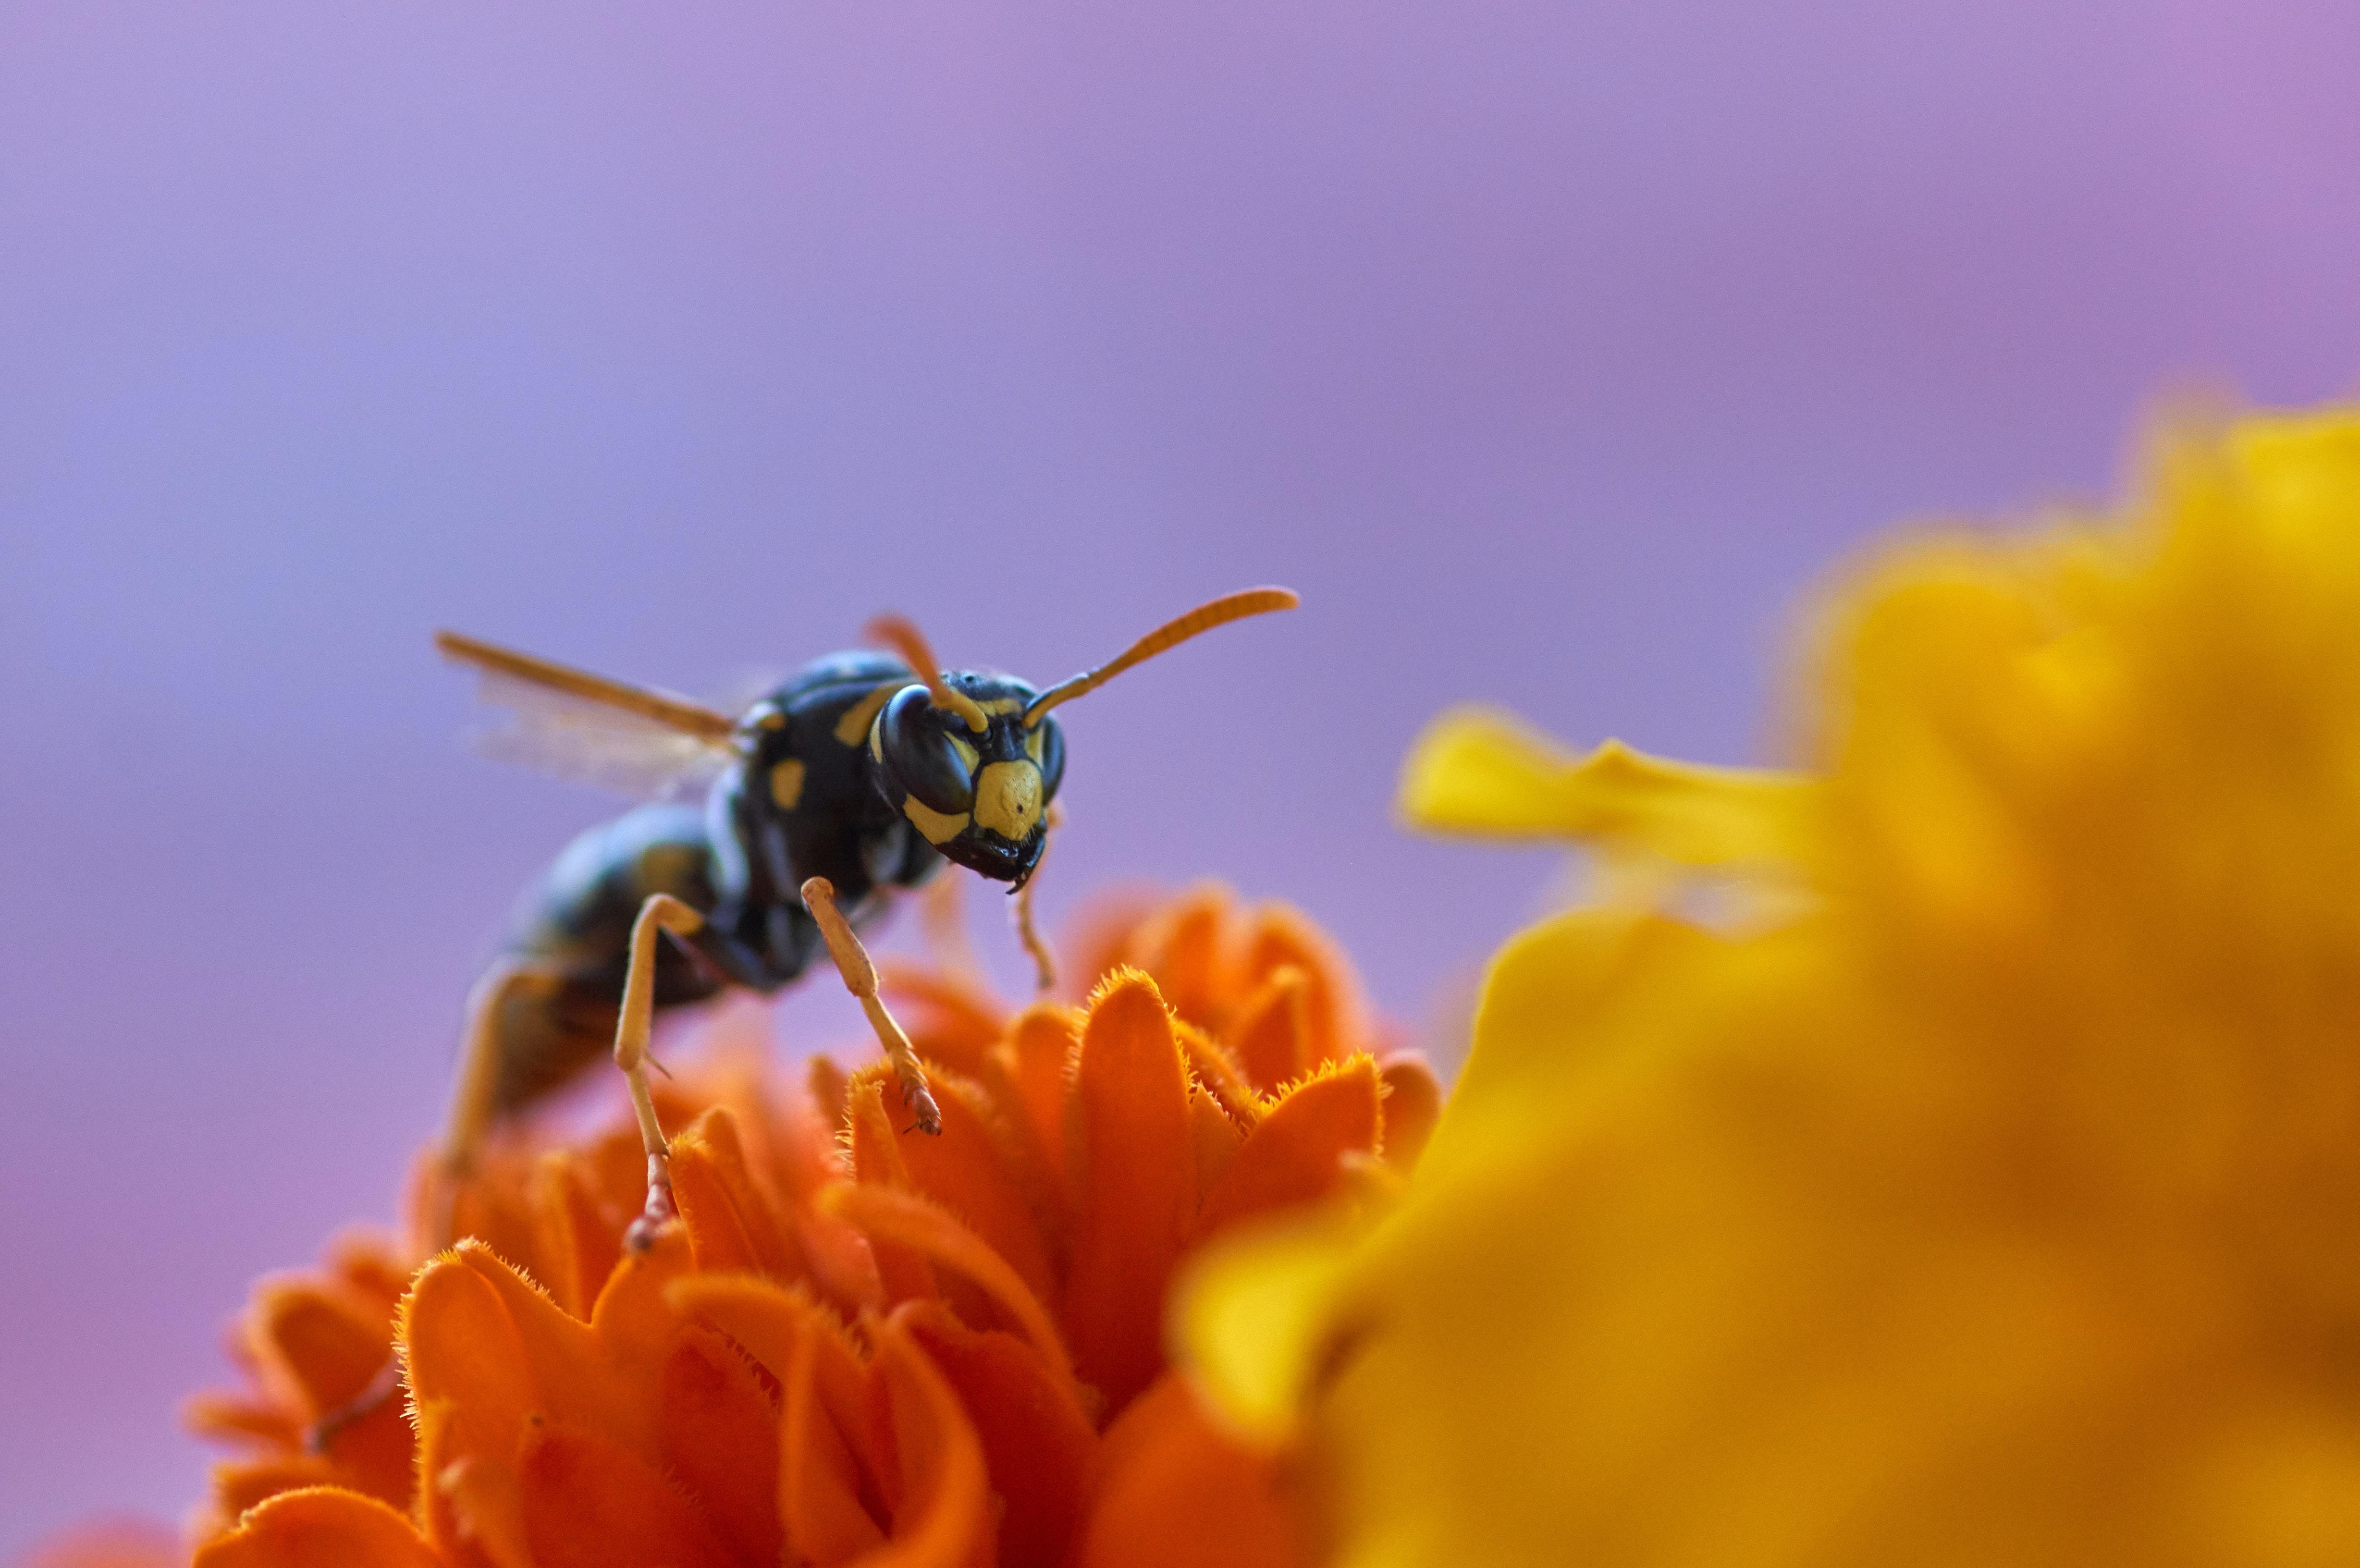 Пчела и оса на одном фото